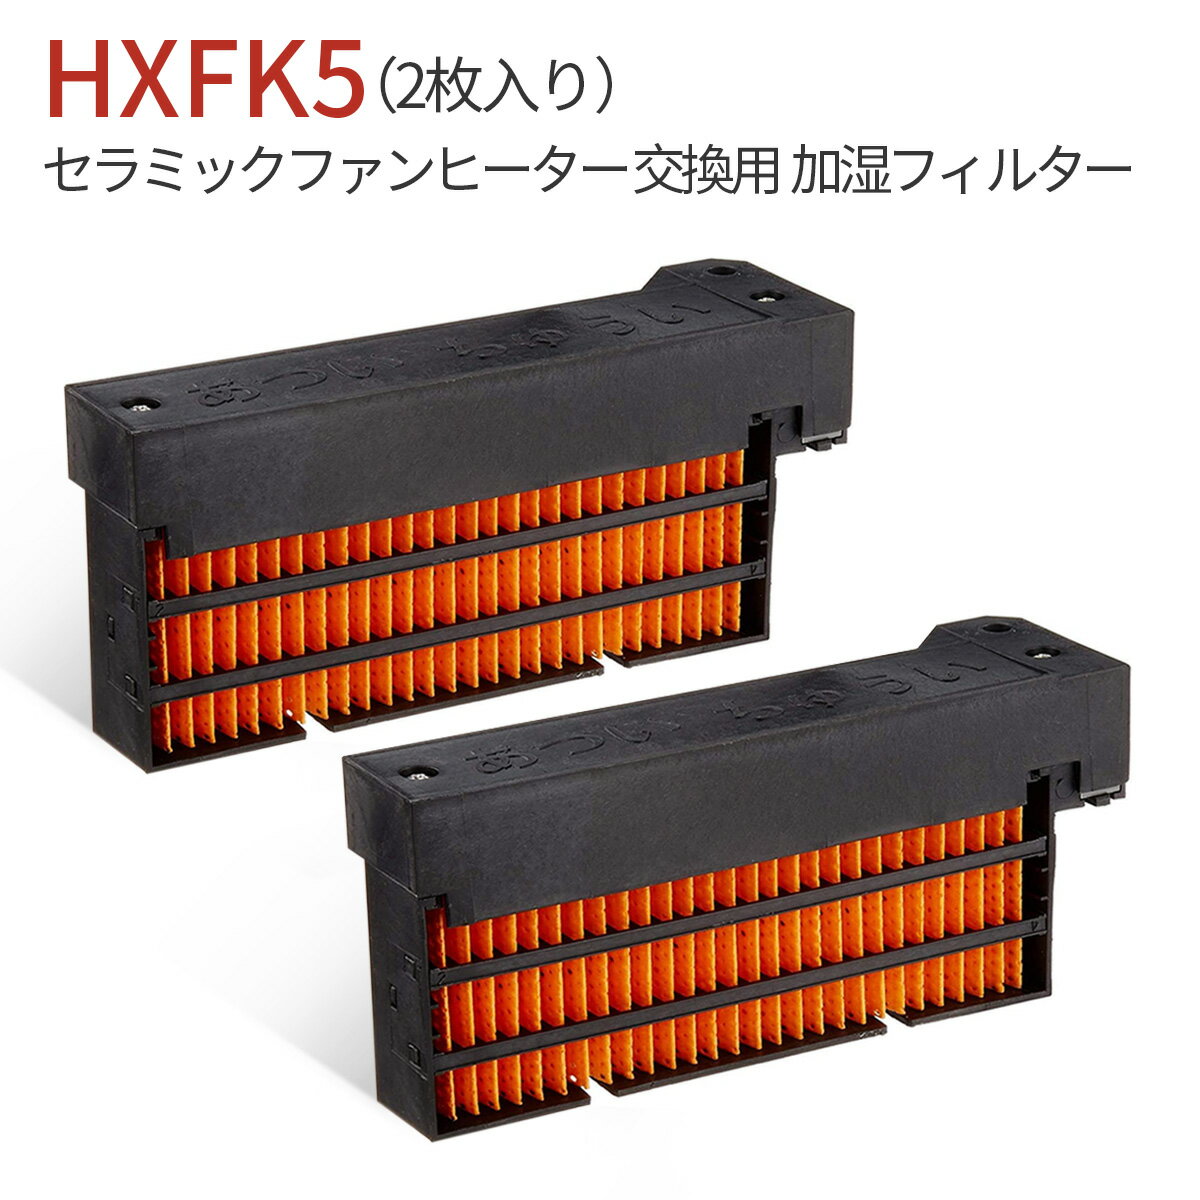 HX-FK5 シャープ 加湿フィルター hx-fk5